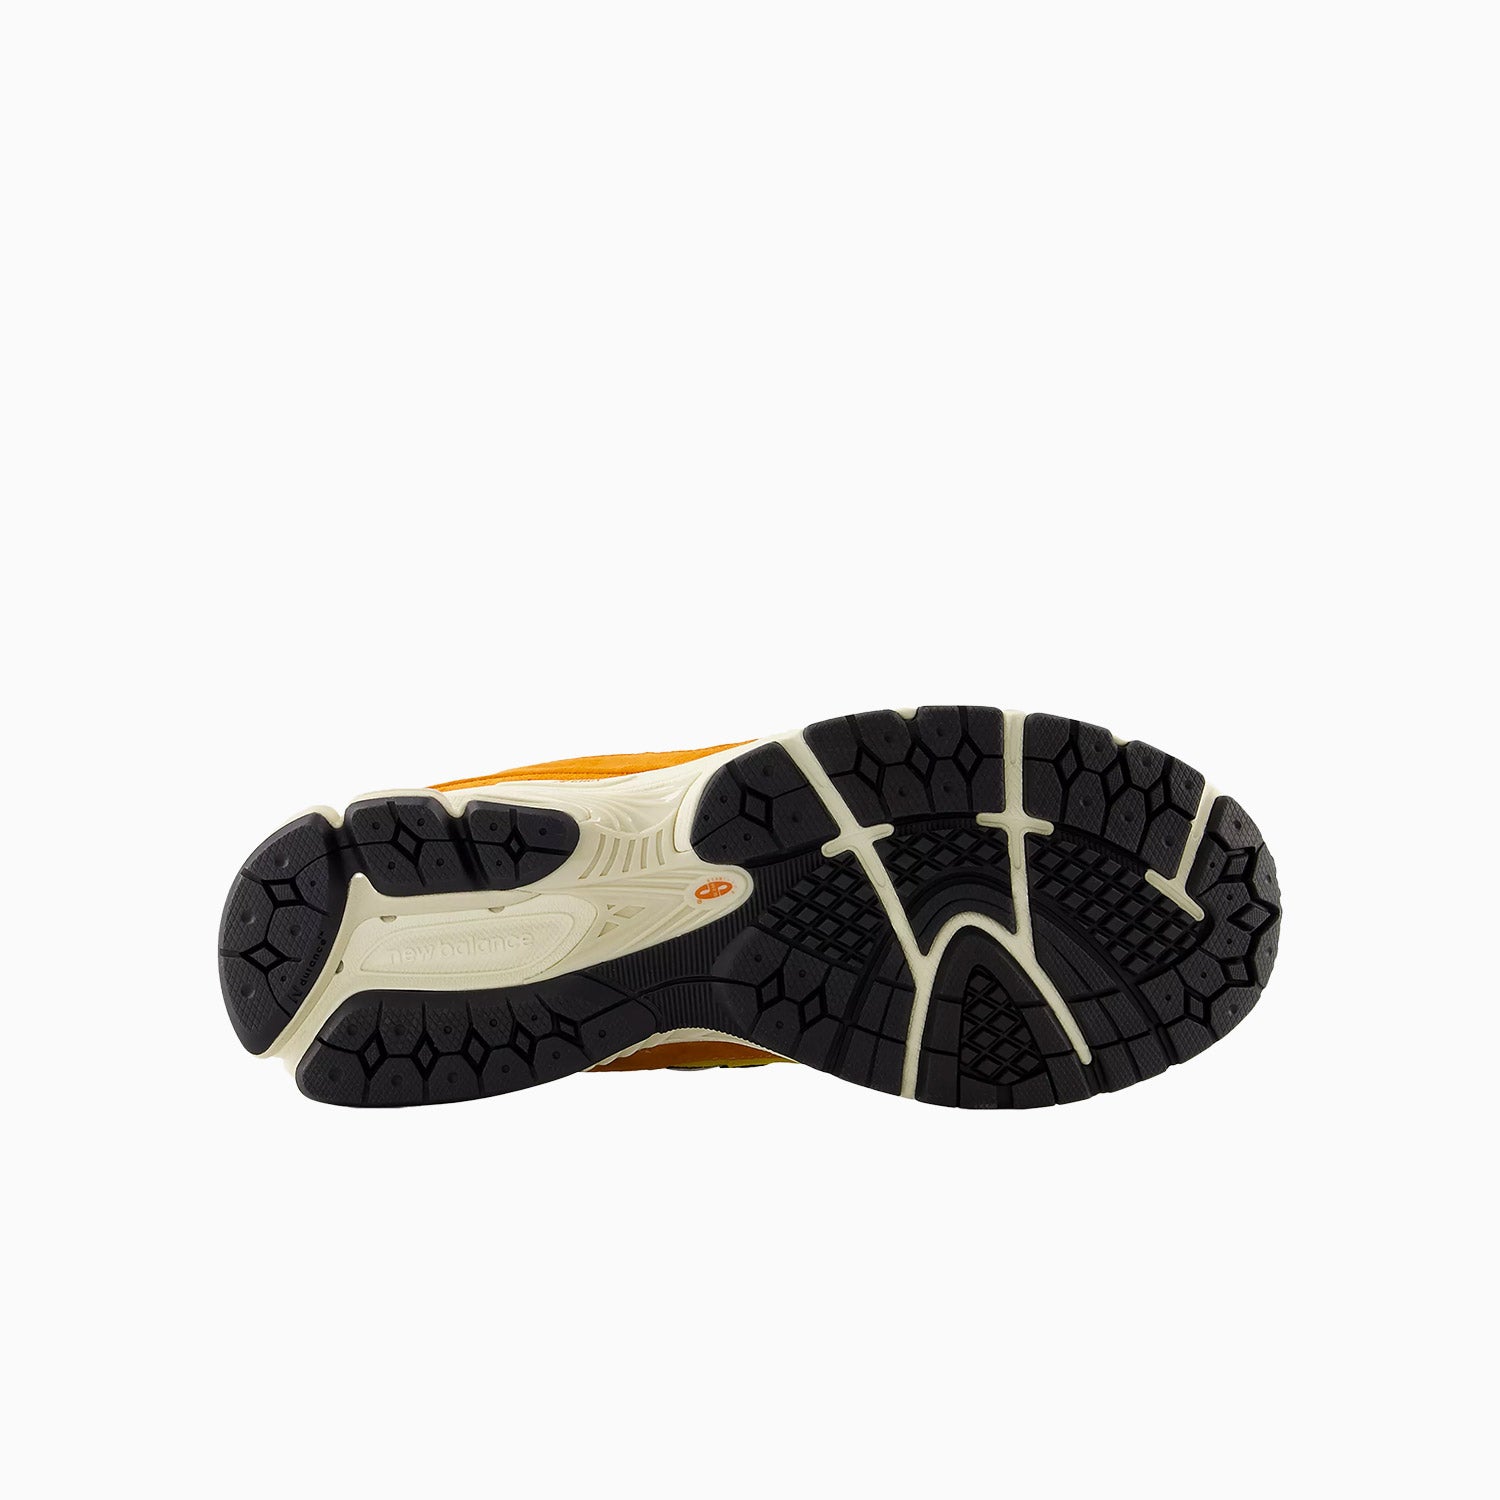 new-balance-2002r-ginger-lemon-shoes-m2002rpa